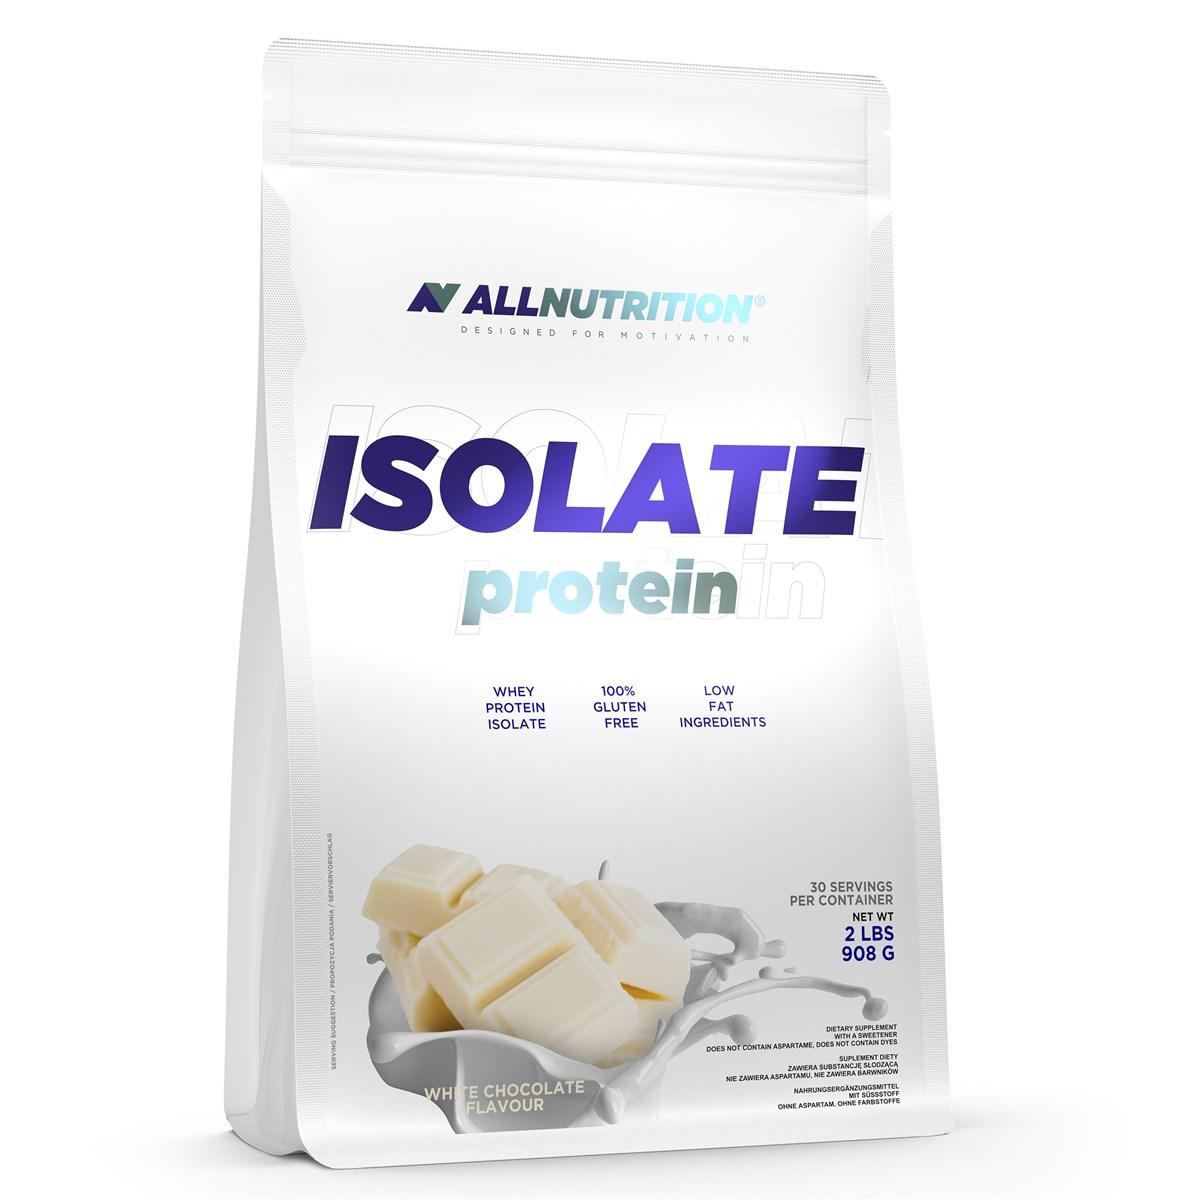 Сывороточный протеин изолят AllNutrition Isolate Protein (908 г) алл нутришн Chocolate-Banana,  мл, AllNutrition. Сывороточный изолят